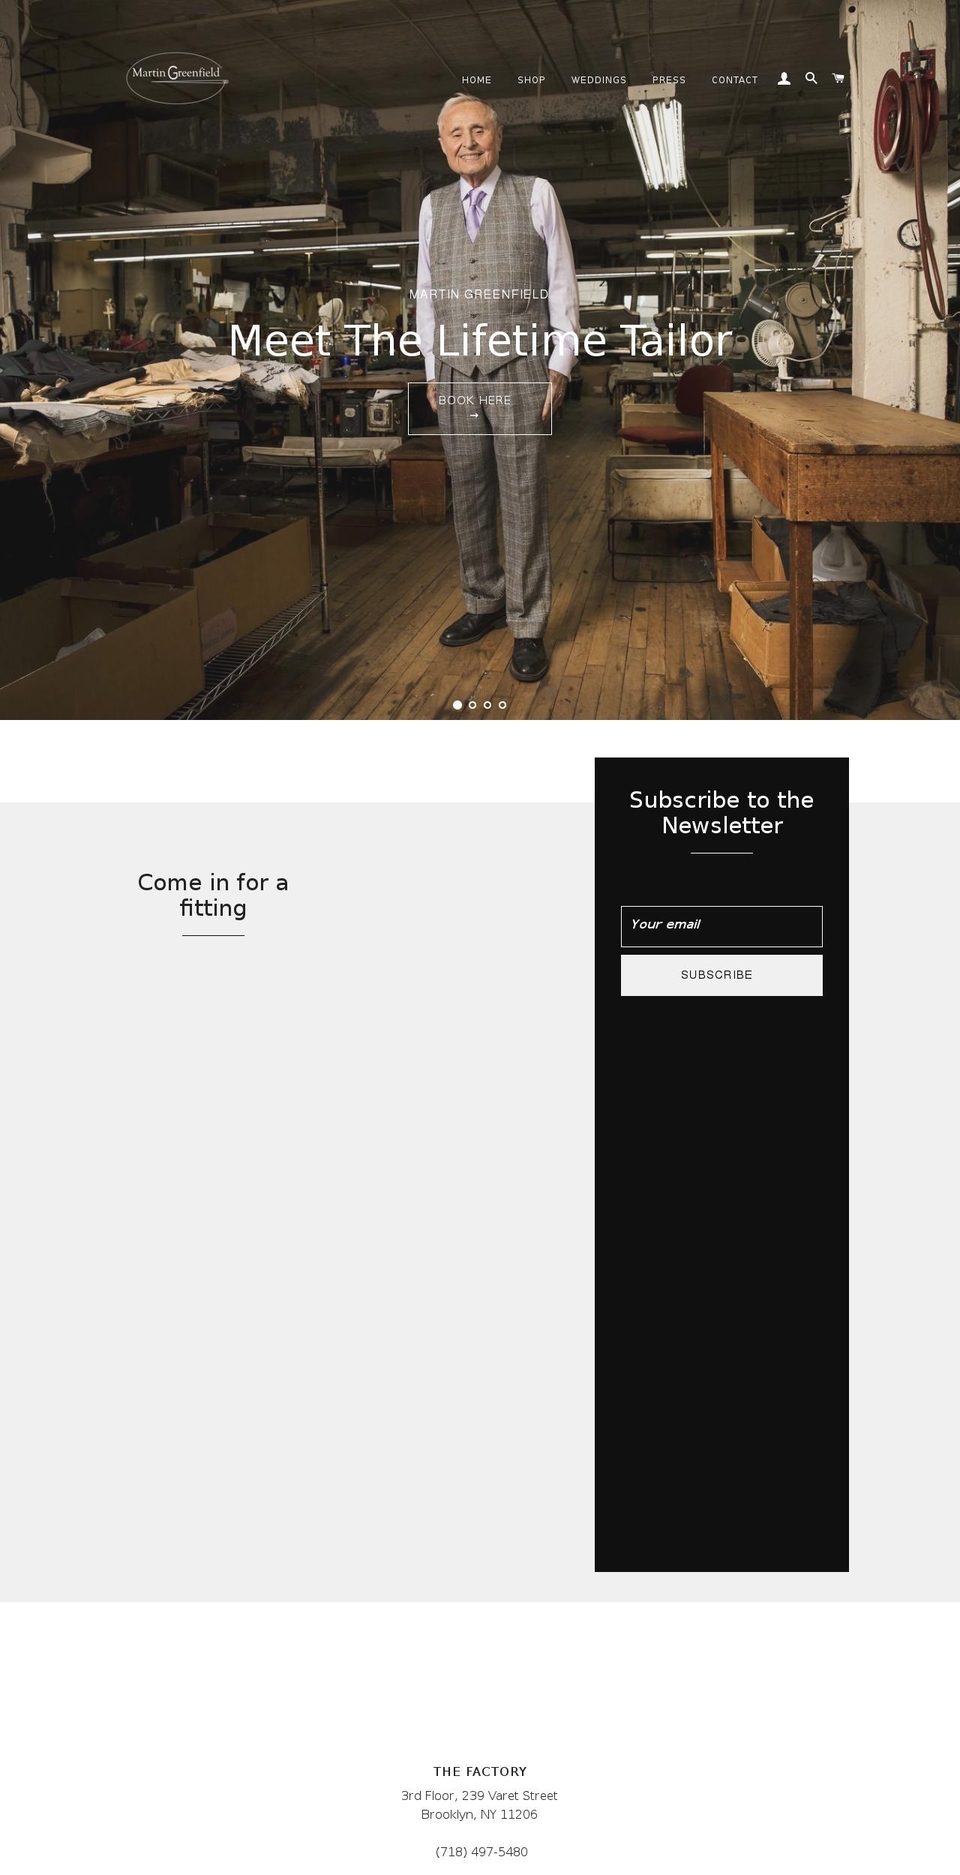 martingreenfield.social shopify website screenshot